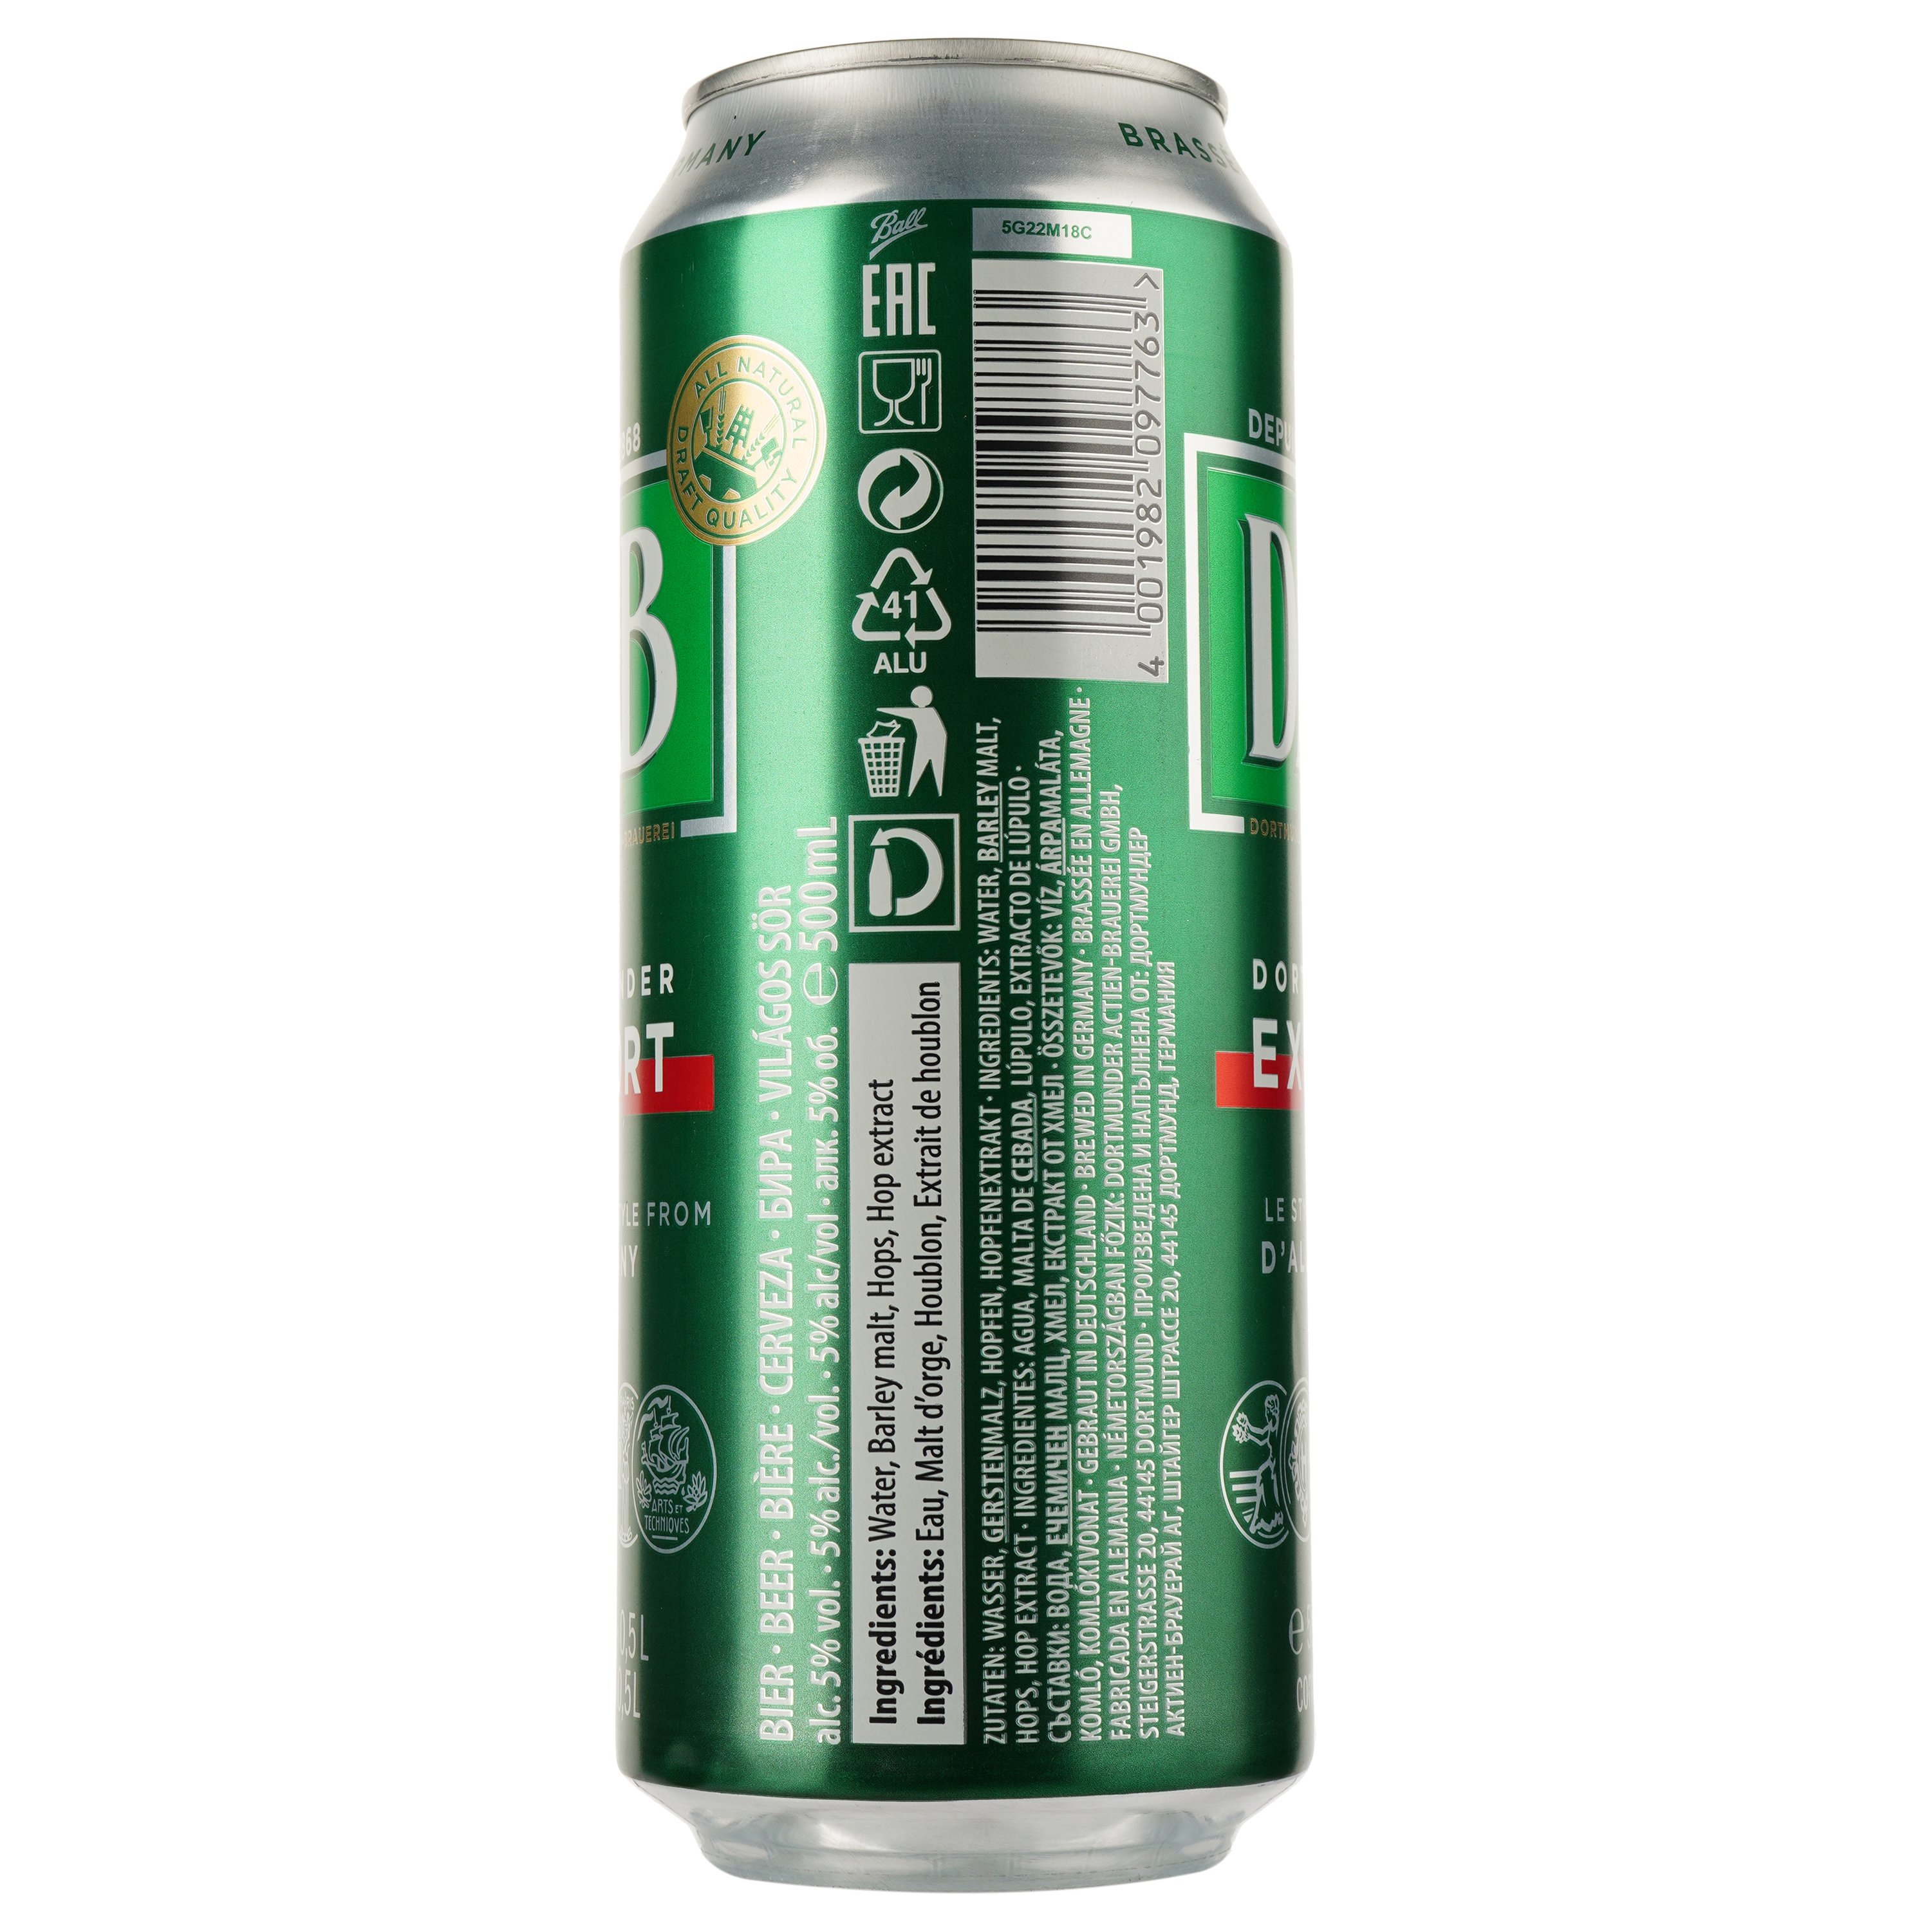 Пиво DAB Dortmunder Export, светлое, ж/б, 5%, 0,5 л - фото 2